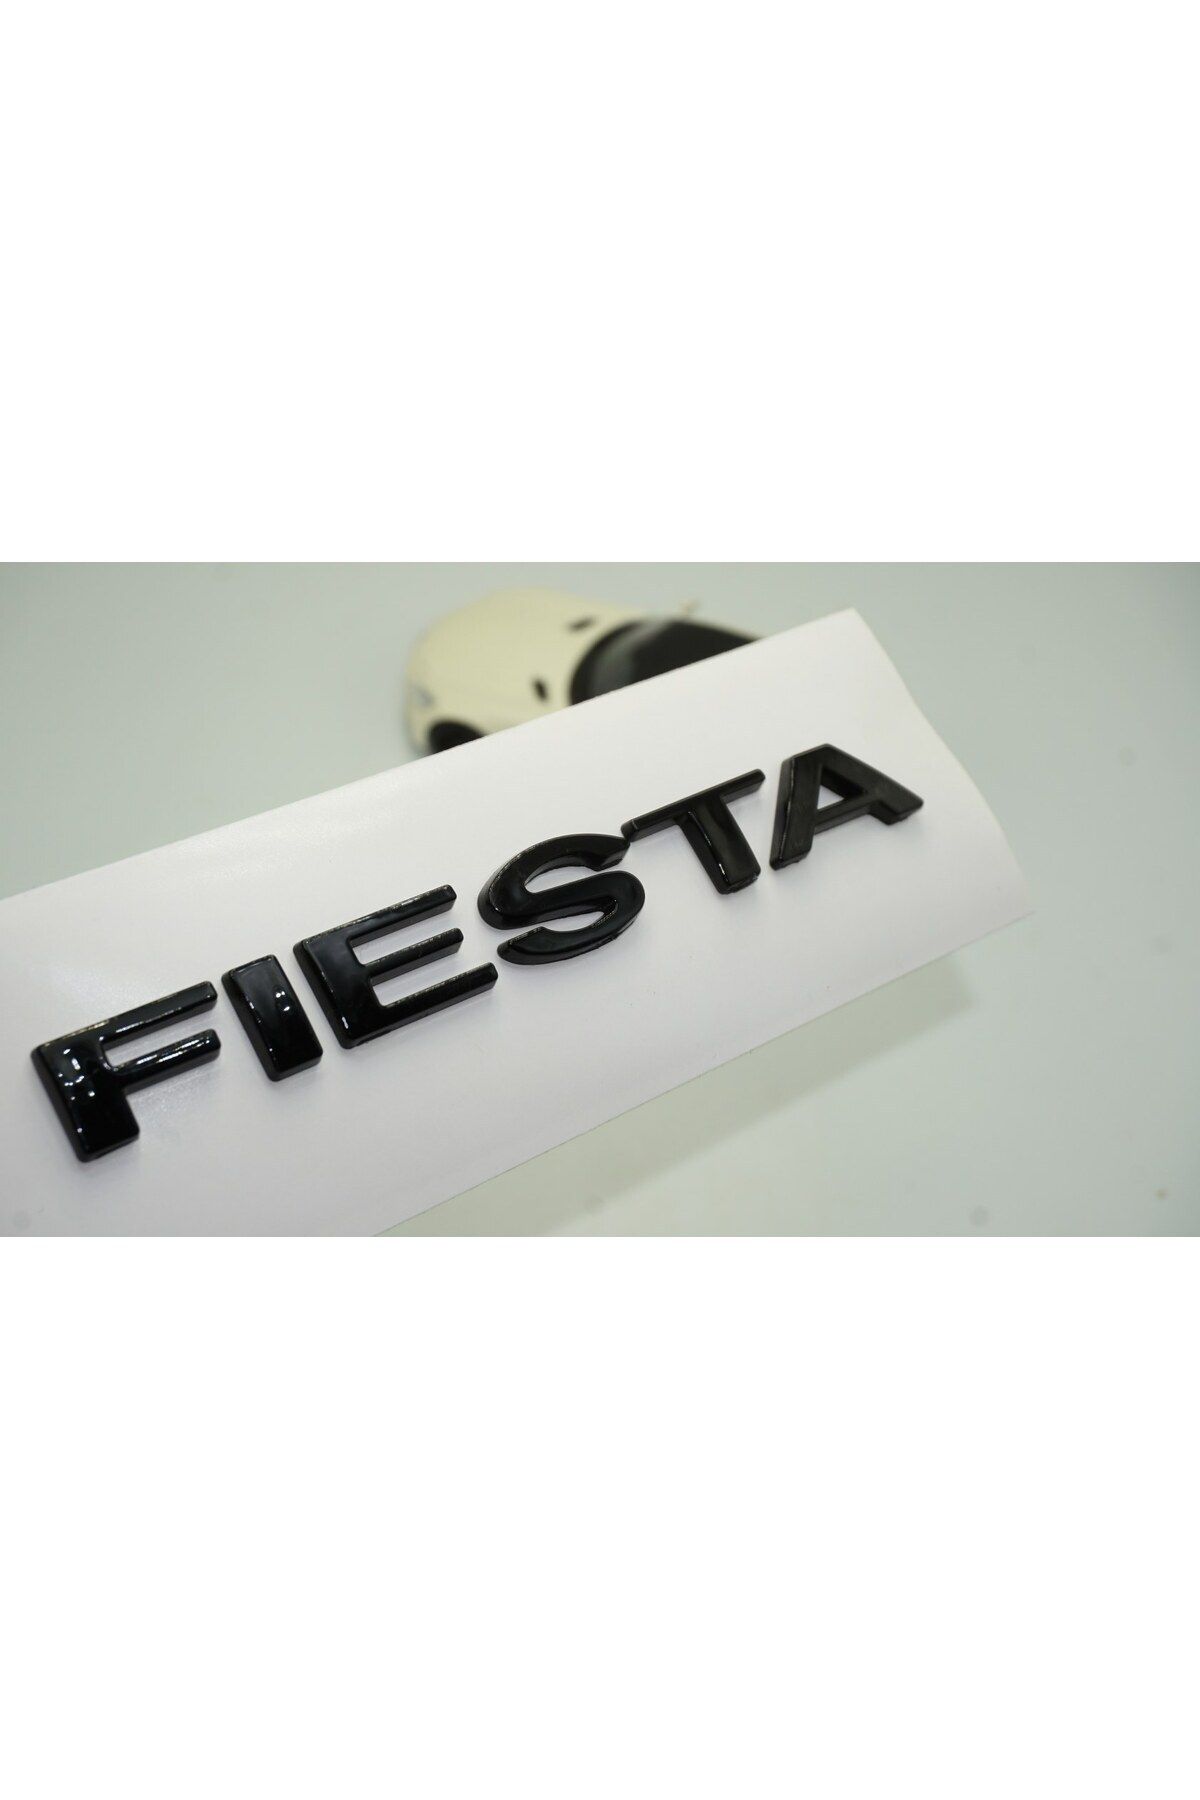 Fiesta Dk Tuning Dk Yeni Model Bagaj 3m 3d Siyah Abs Logo Amblem